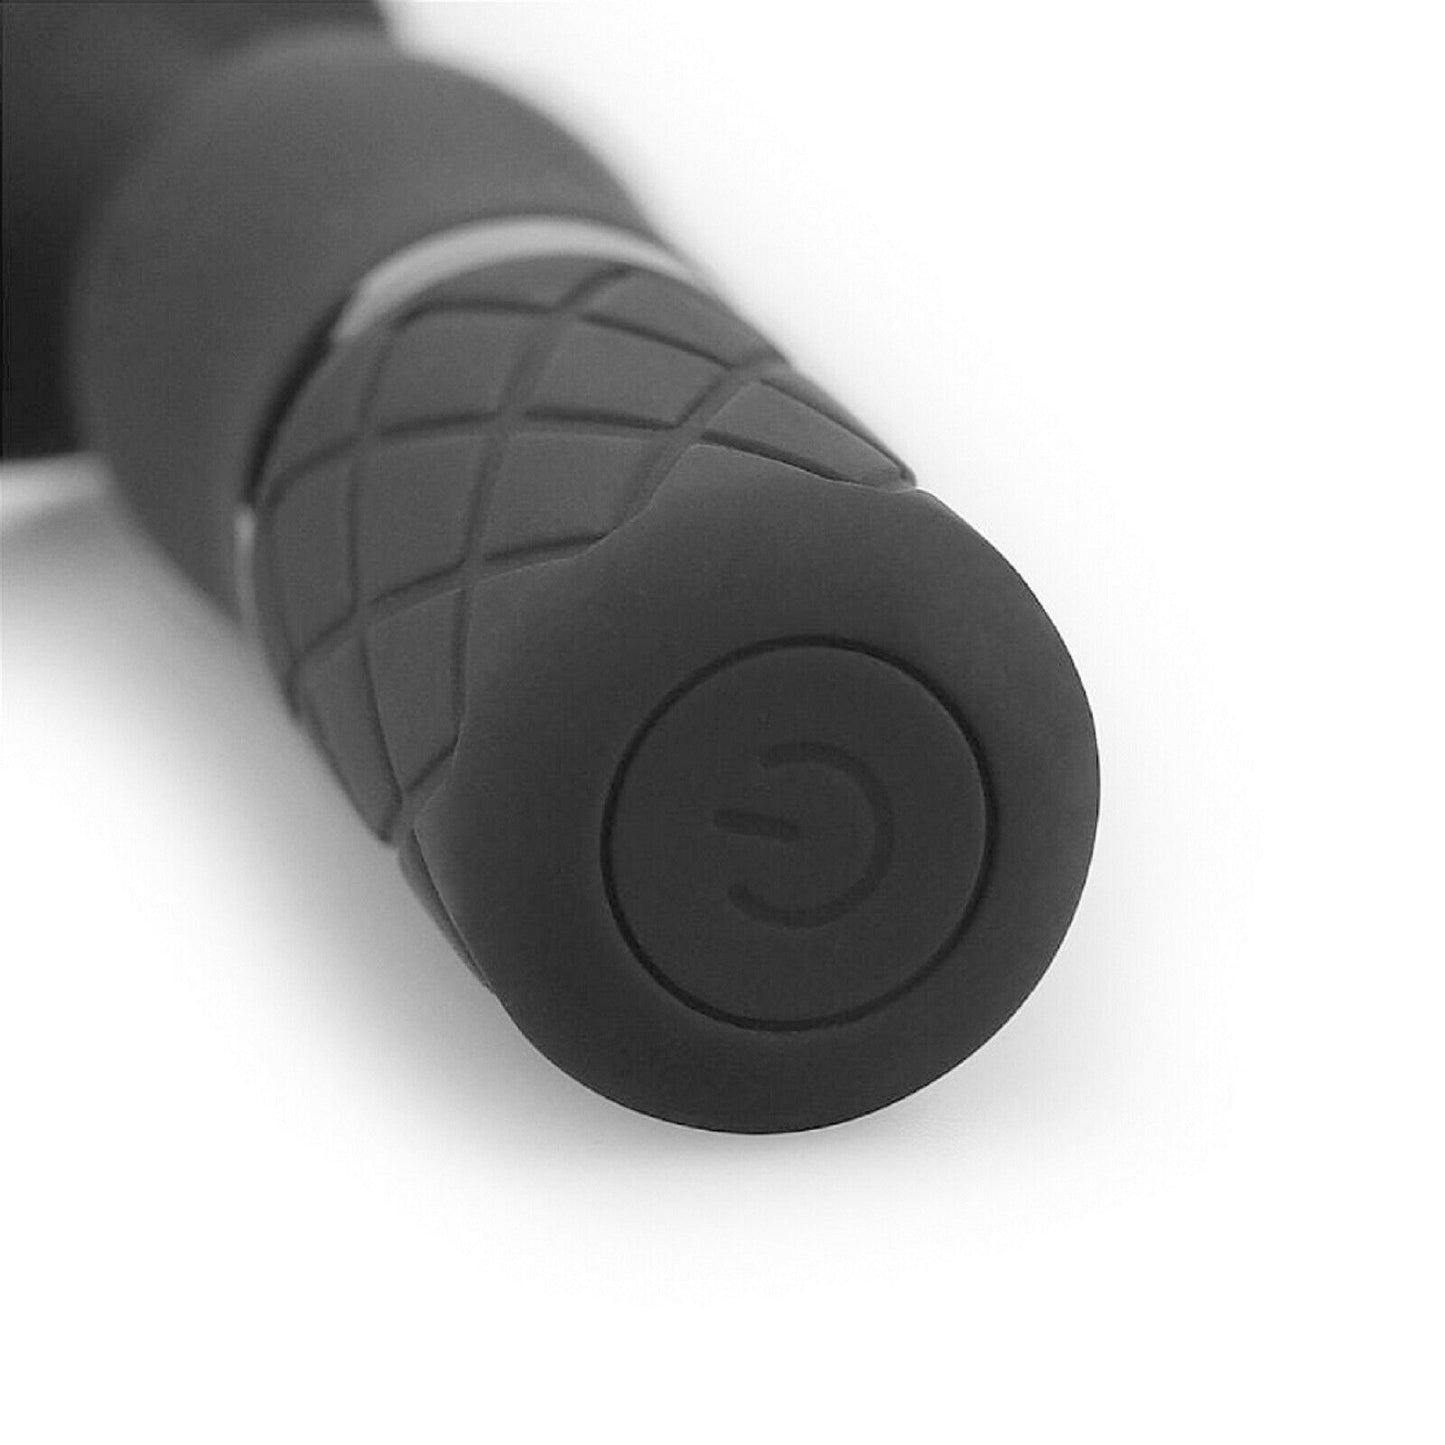 Lovetoy Vibrator Clit Wand Stimulator G-Spot Massager Clitoral Dildo Sex Toy